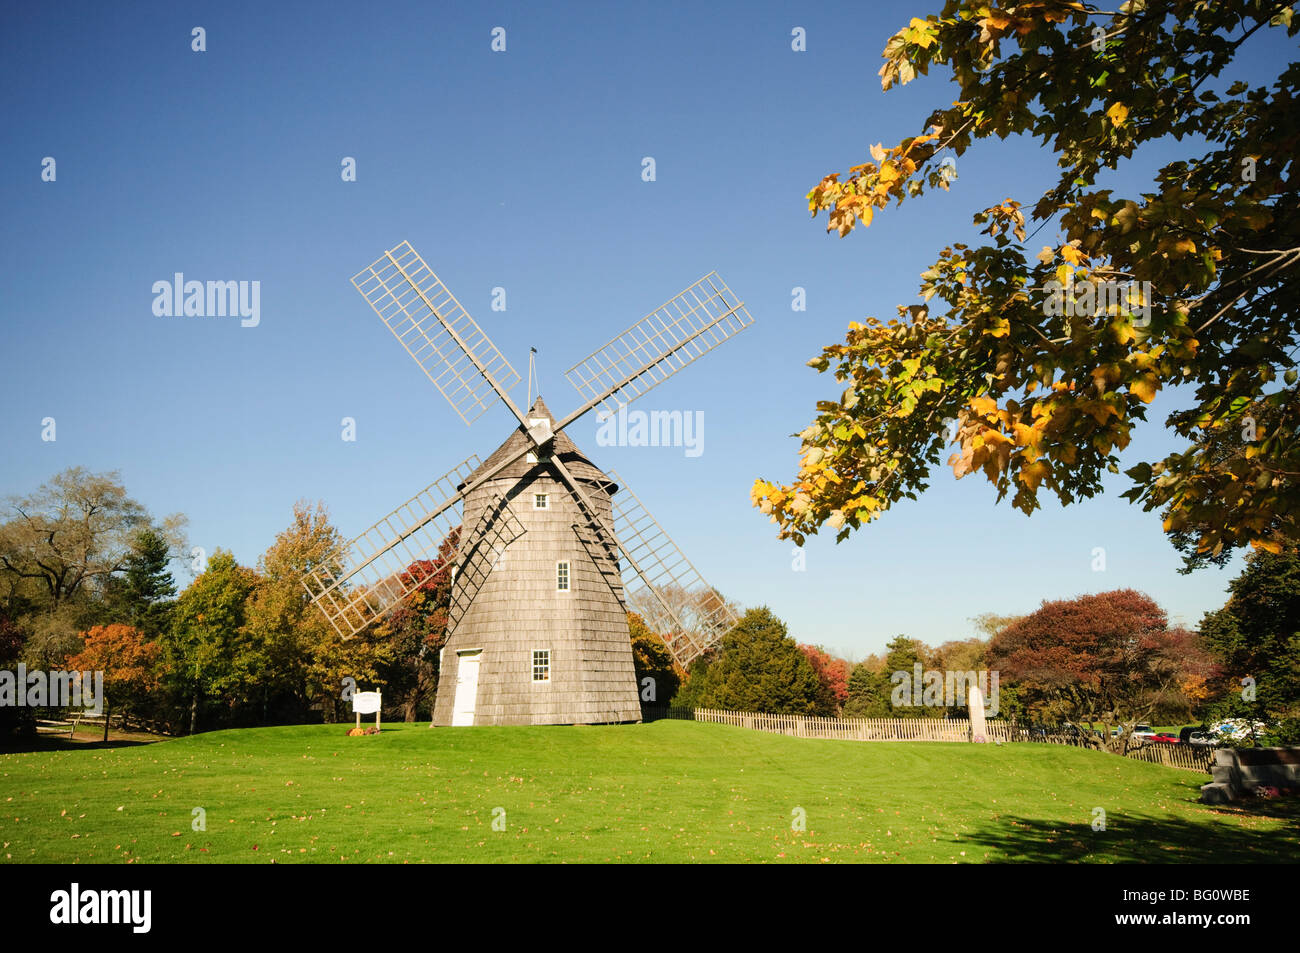 Alte Windmühle Haken, East Hampton, Hamptons, Long Island, New York State, Vereinigten Staaten von Amerika, Nordamerika Stockfoto